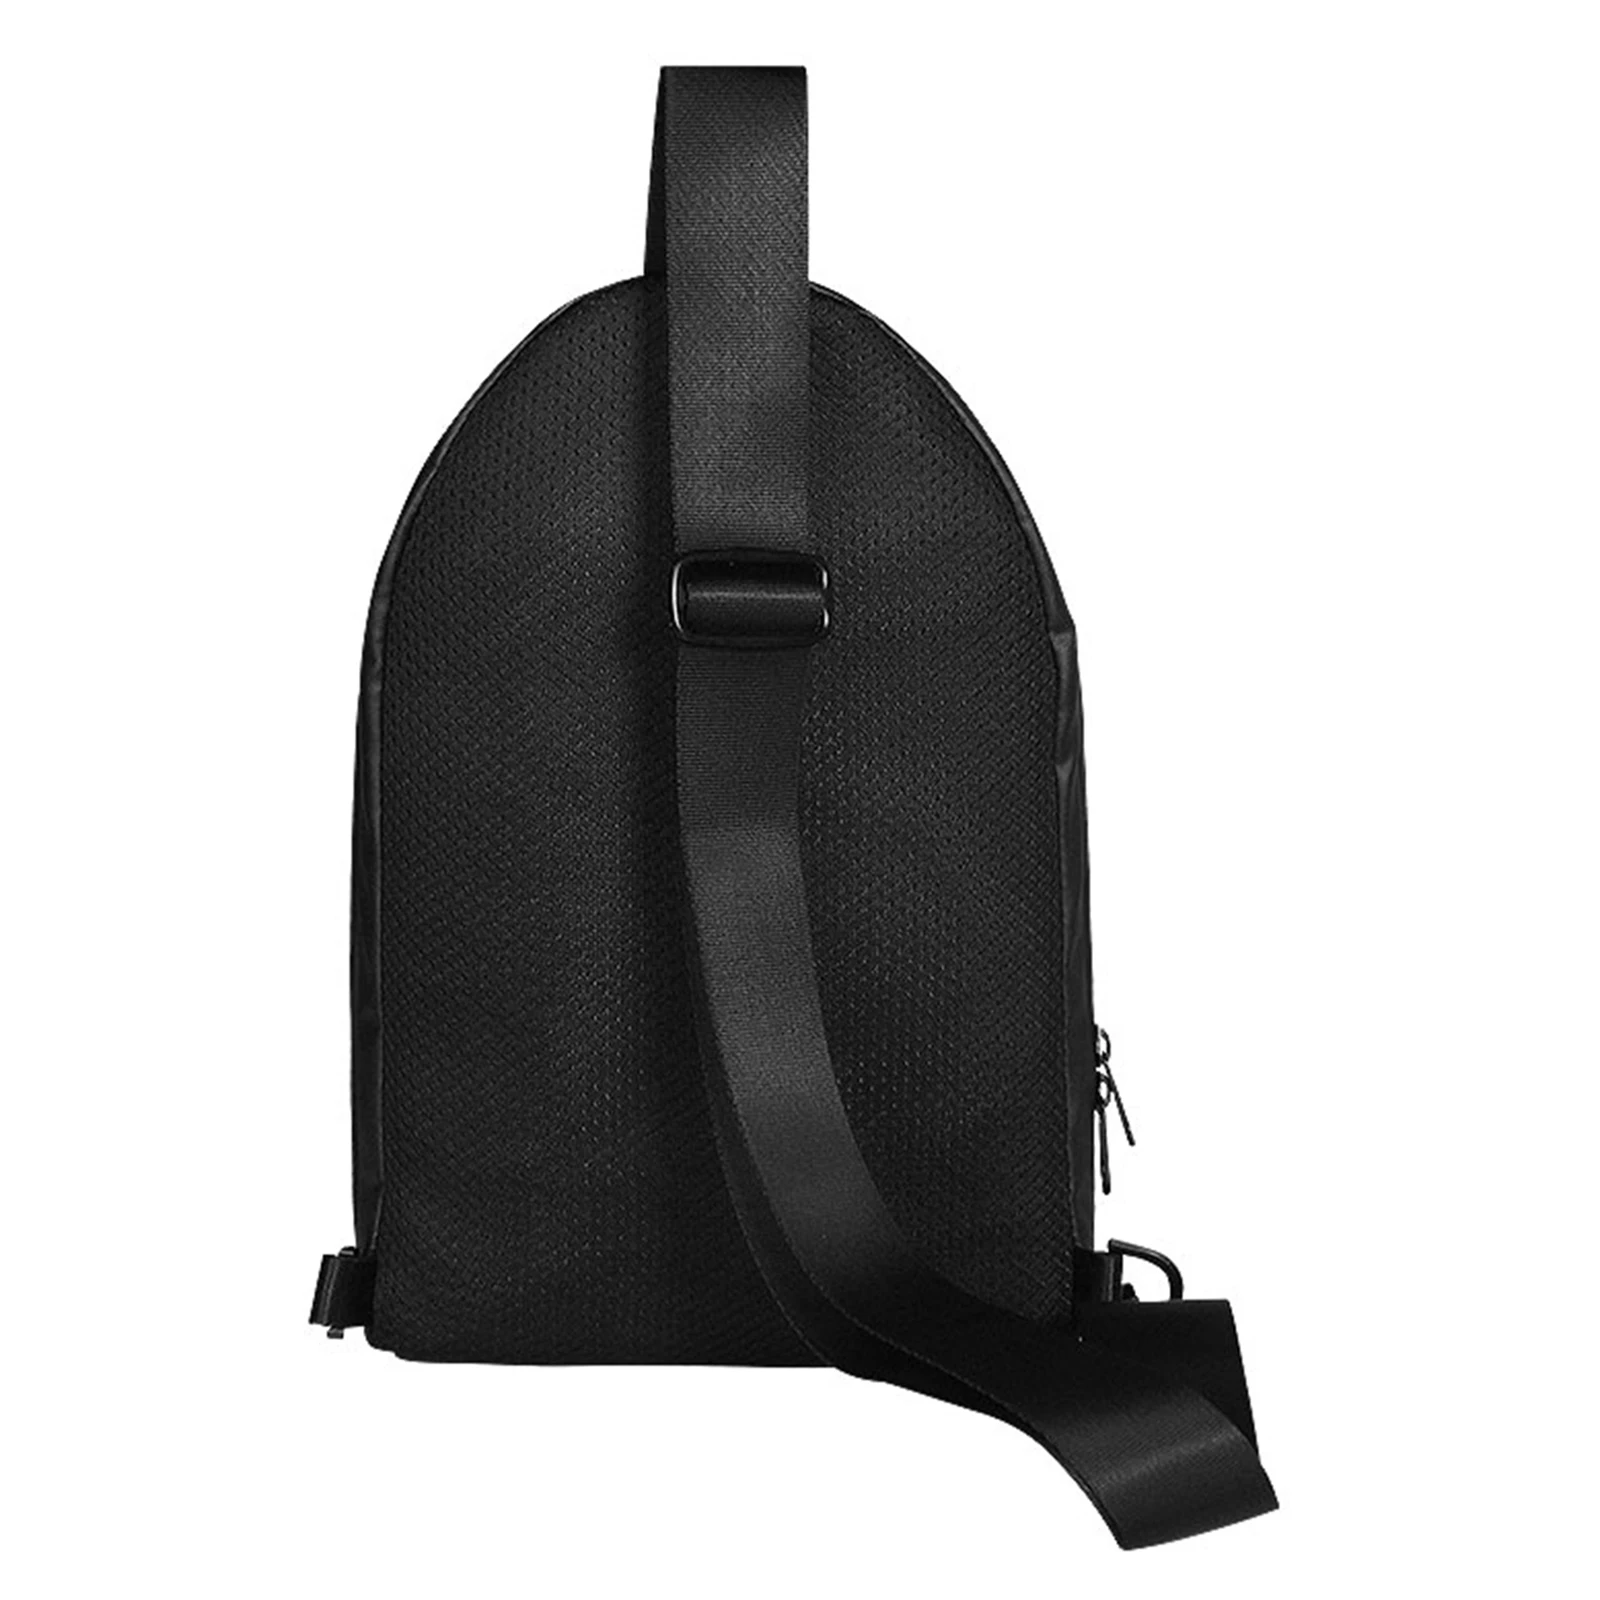 Biosled Smart LED Backpack, Digital LED Screen Dynamic WIFI Light Crossbody Bags, Water Resistant